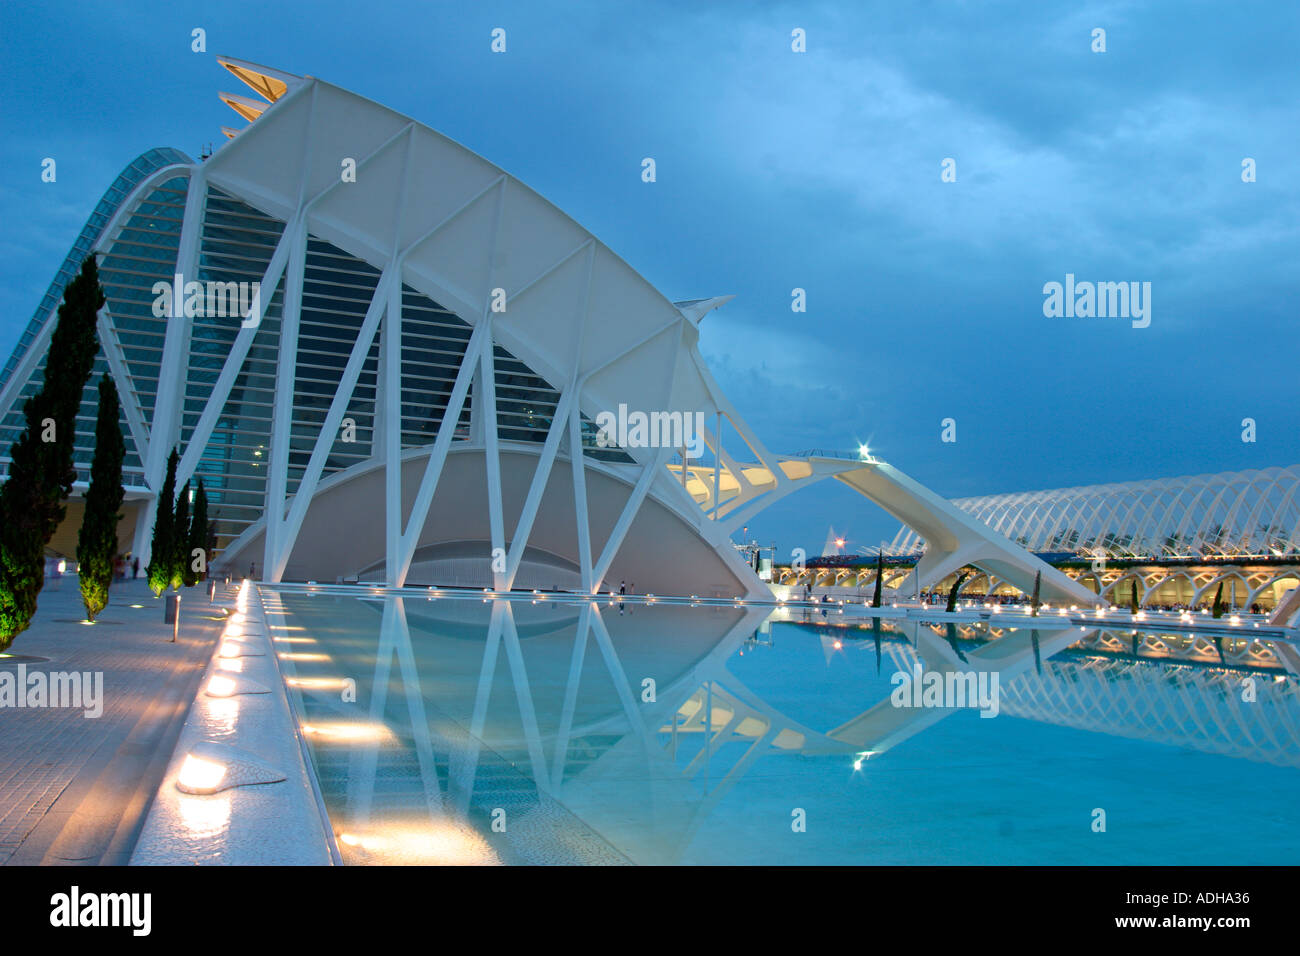 Spain Valencia City of sciences and arts by architect Santiago Calatrava twilight Museum of science at night Stock Photo